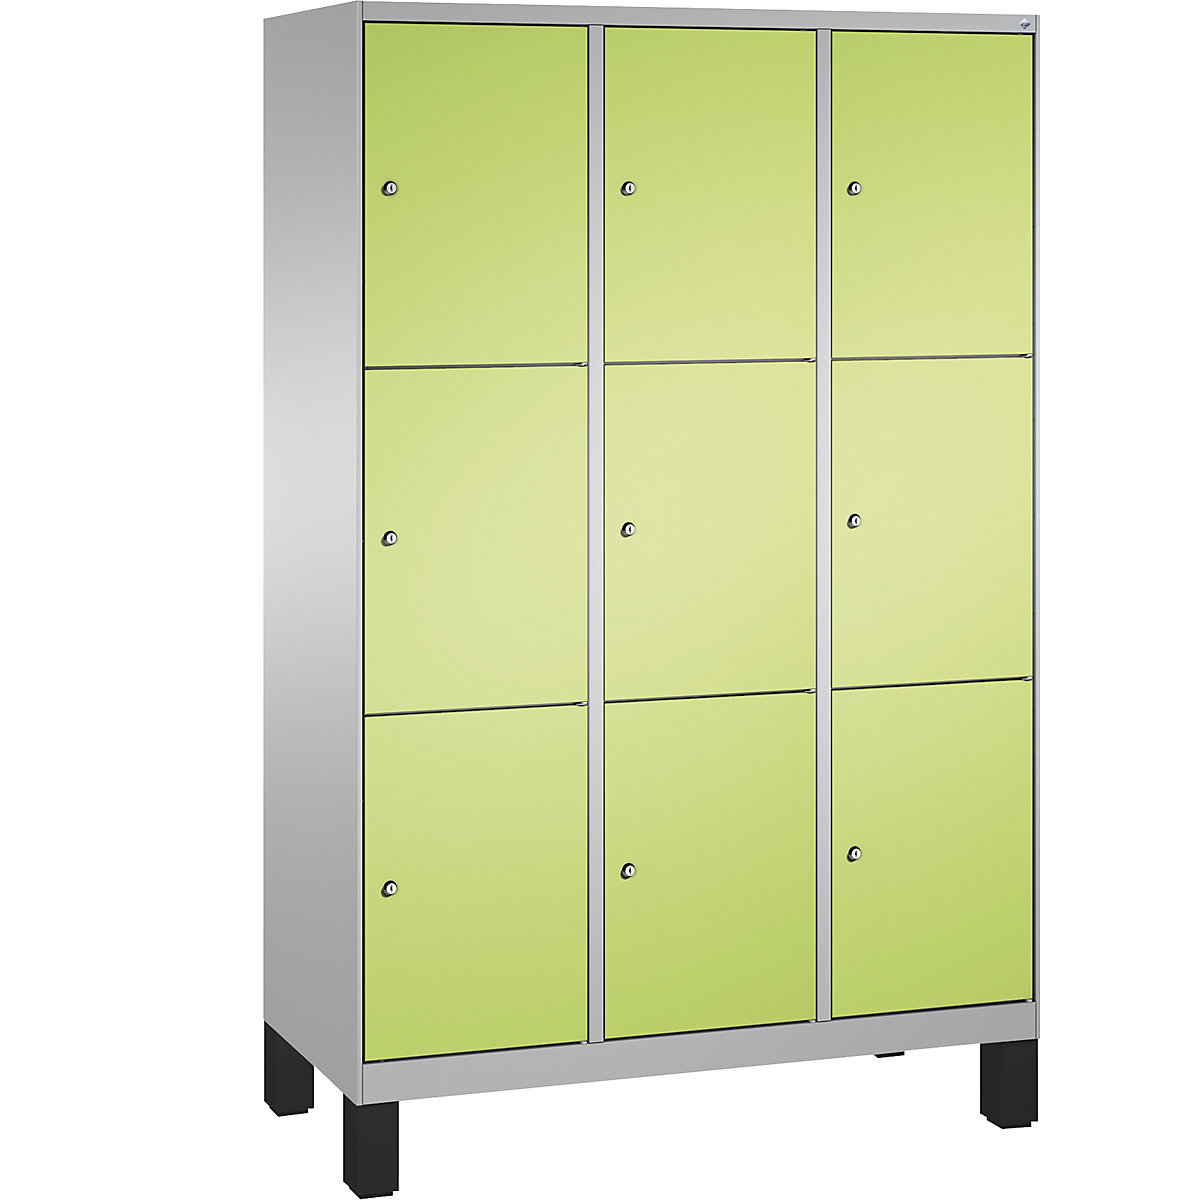 EVOLO locker unit, with feet – C+P, 3 compartments, 3 shelf compartments each, compartment width 400 mm, white aluminium / viridian green-14